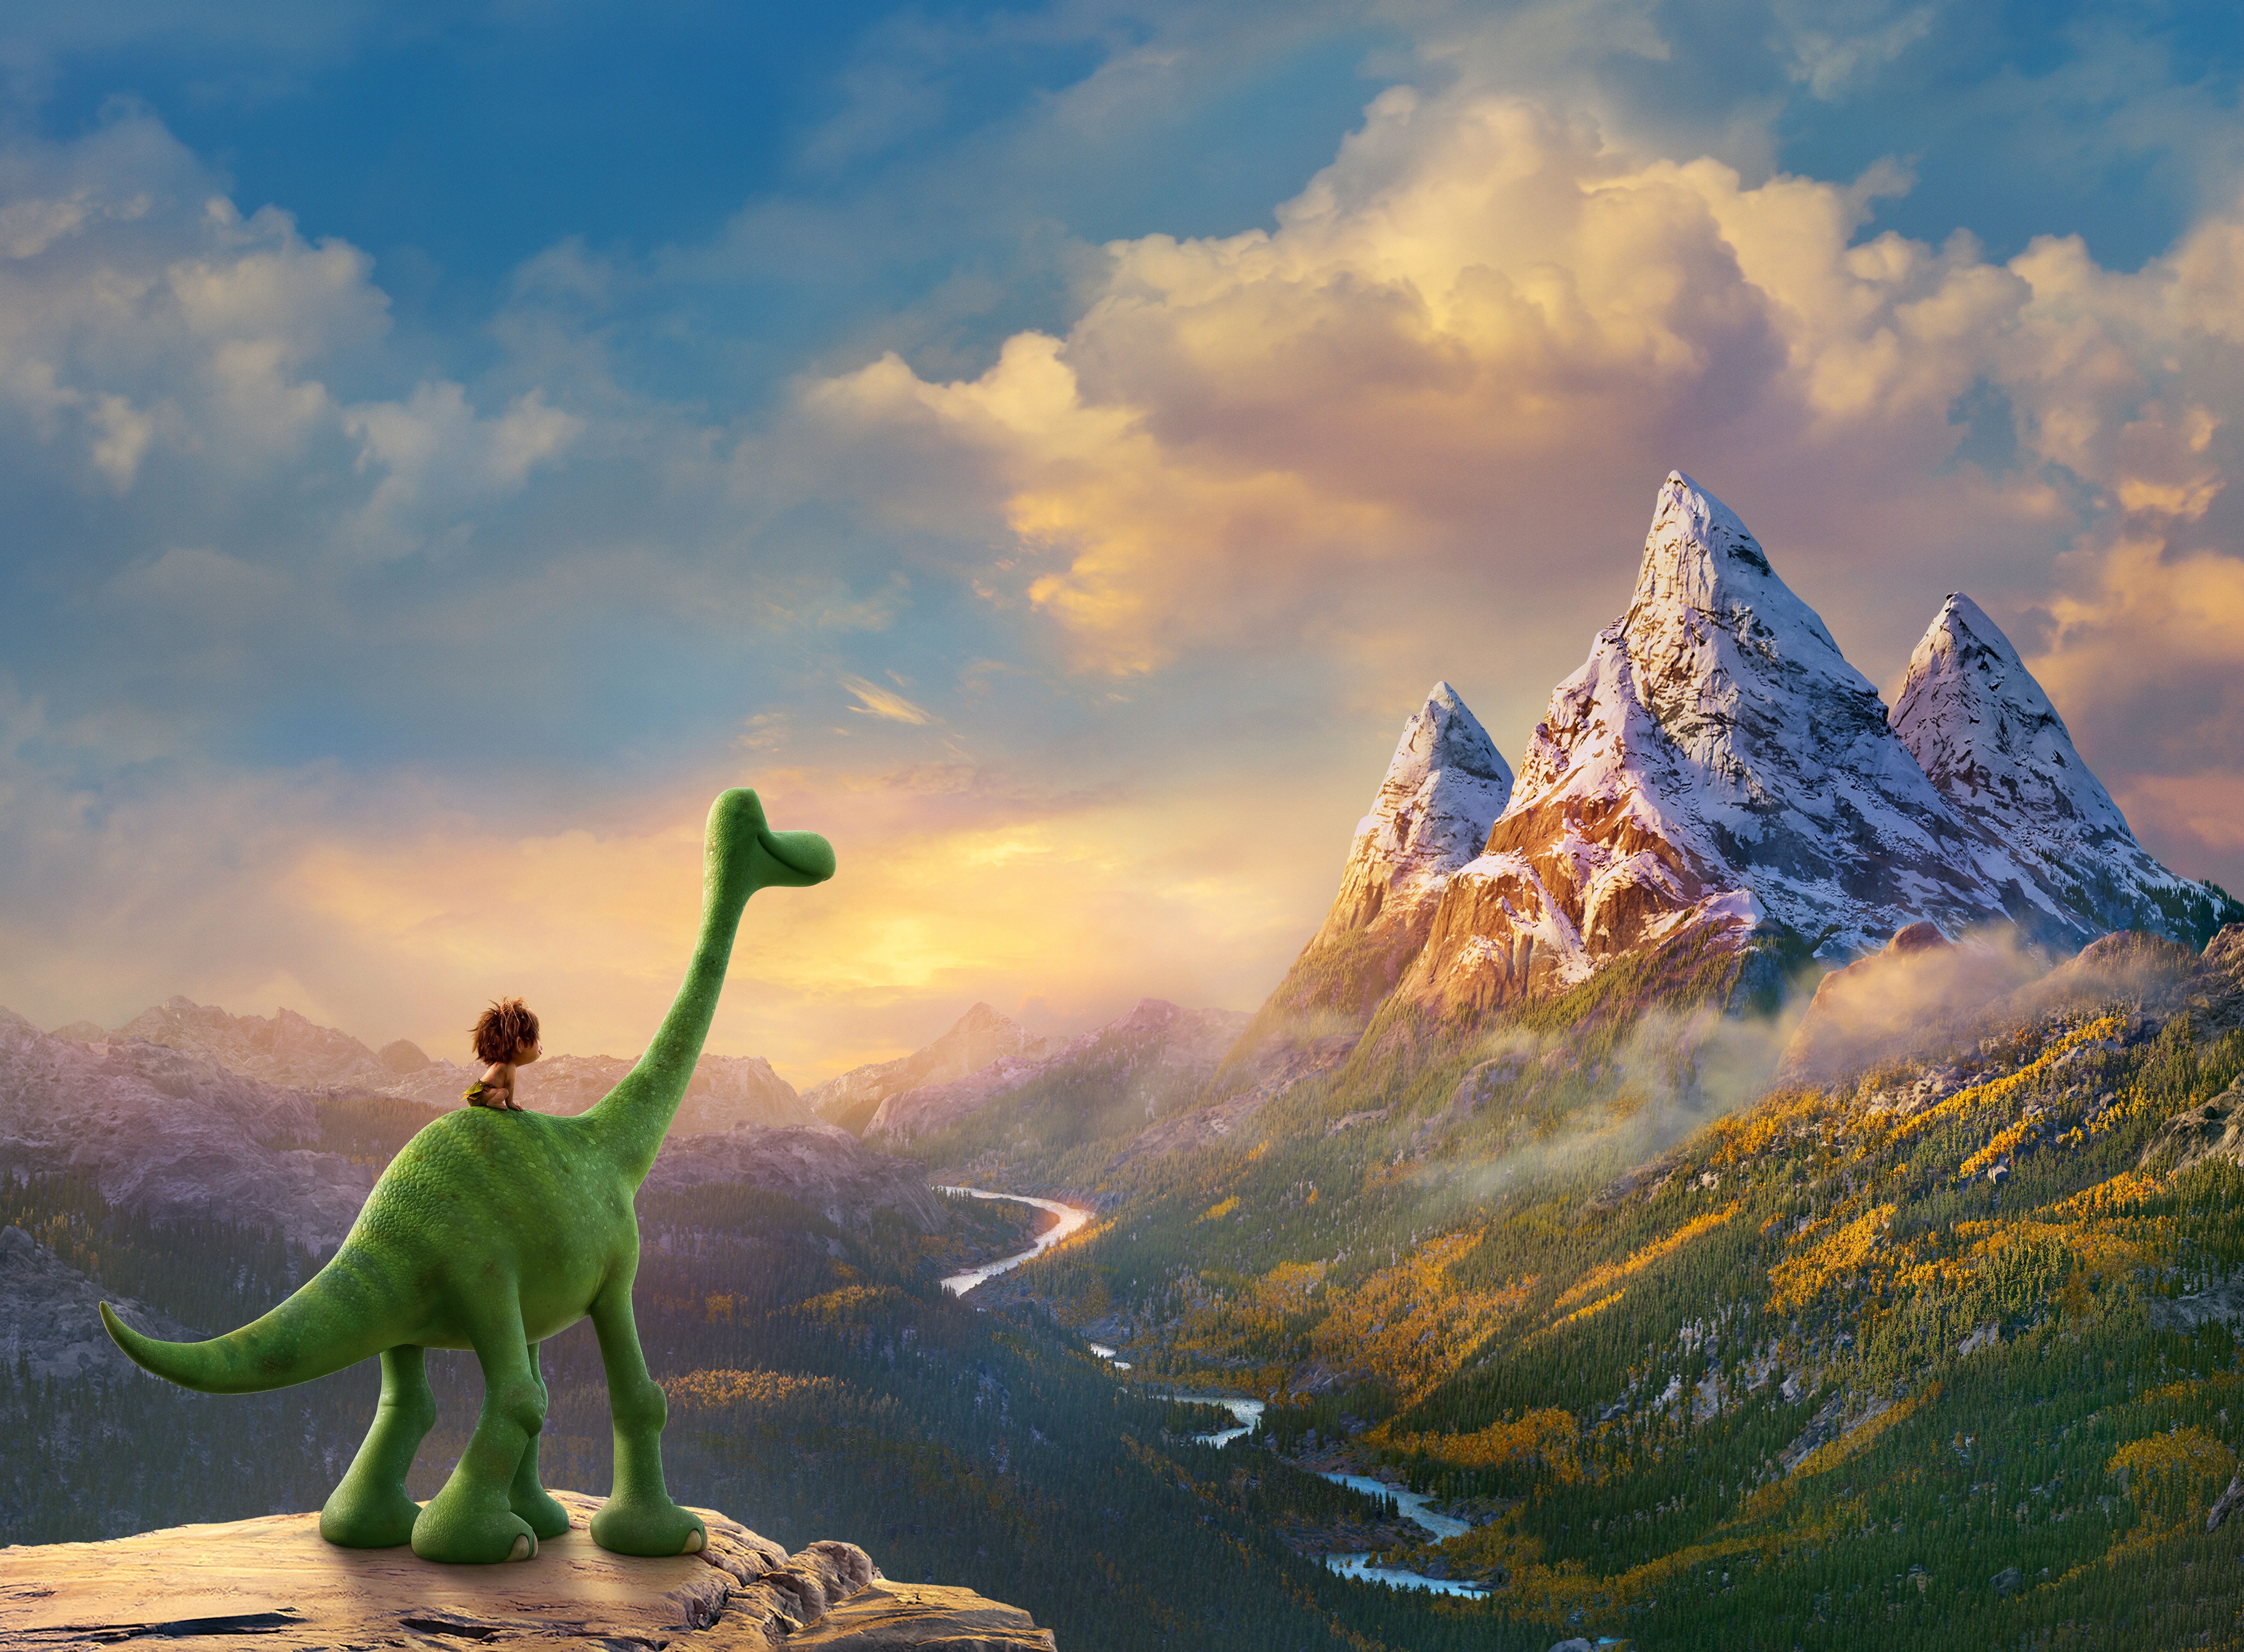 Anime 5000x3682 dinosaurs movies The Good Dinosaur CGI mountains clouds landscape sunset glow